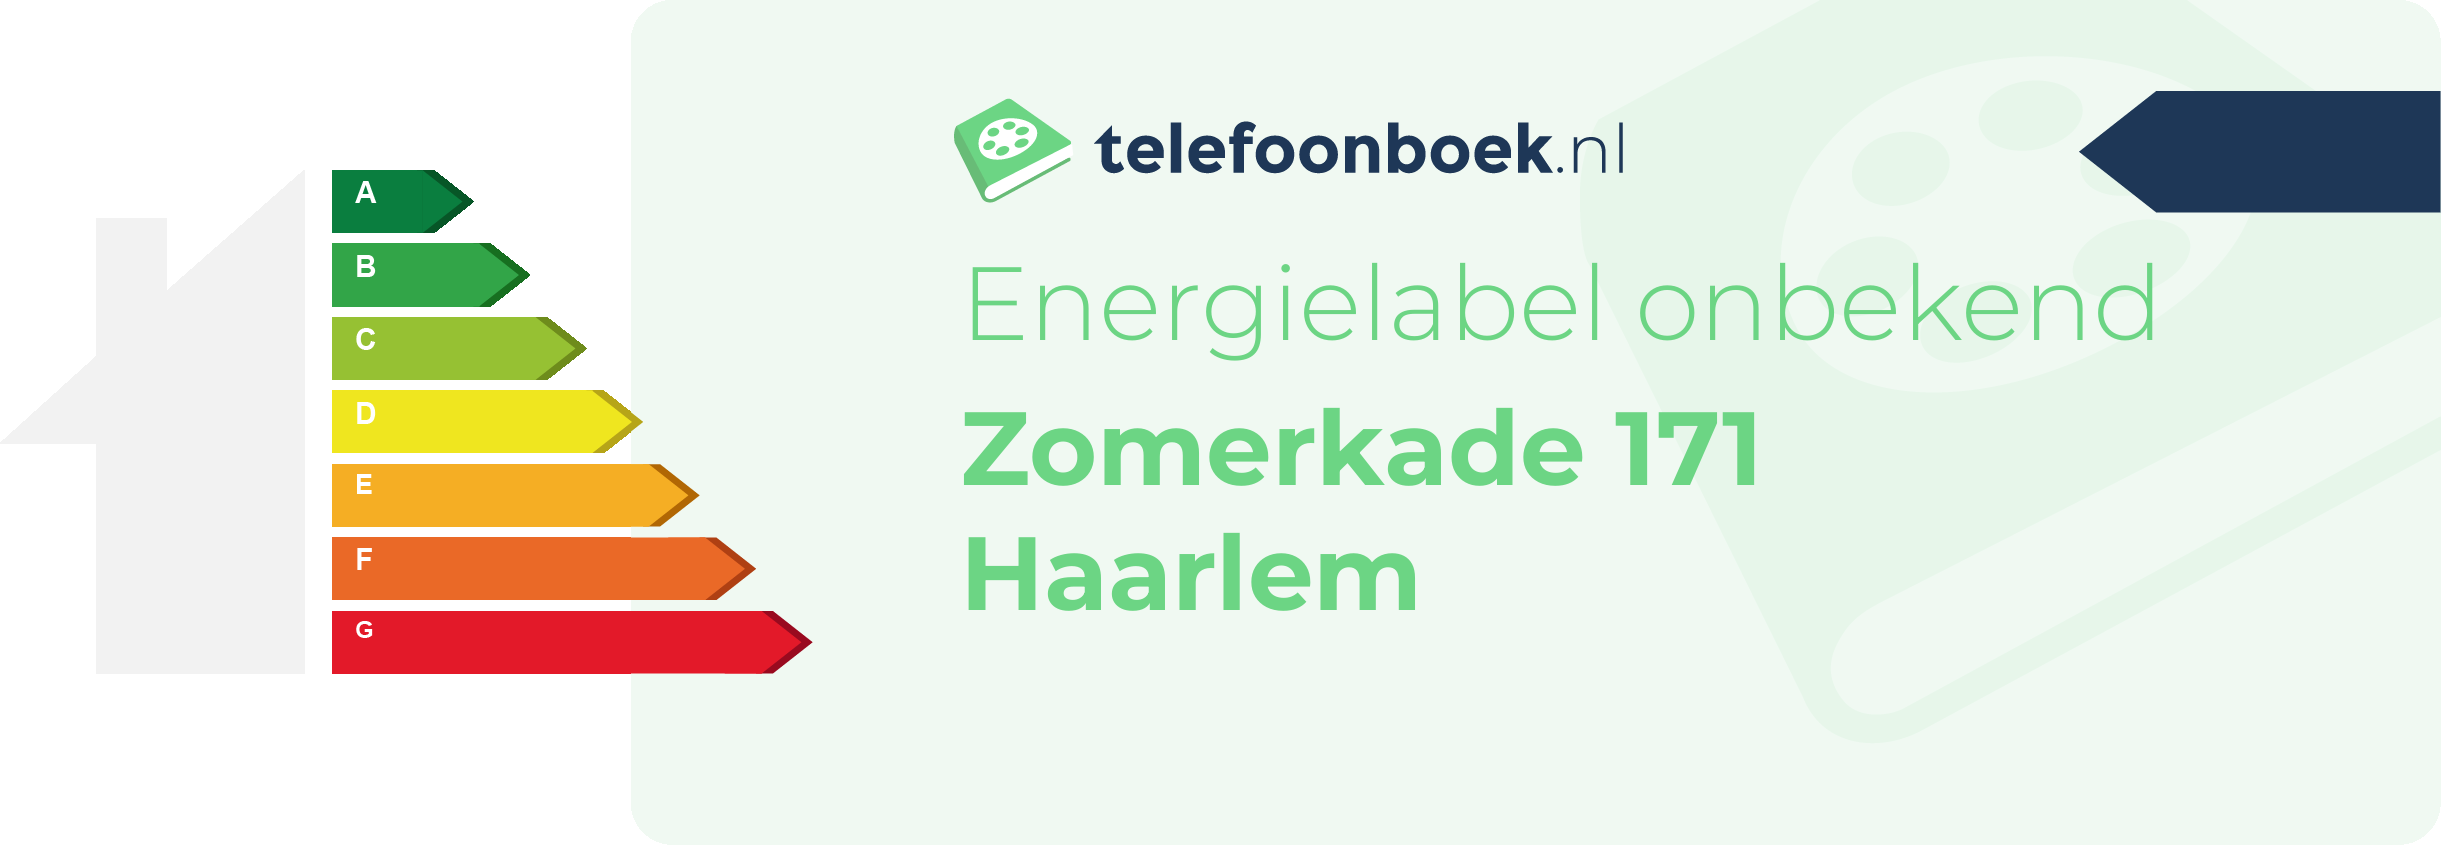 Energielabel Zomerkade 171 Haarlem